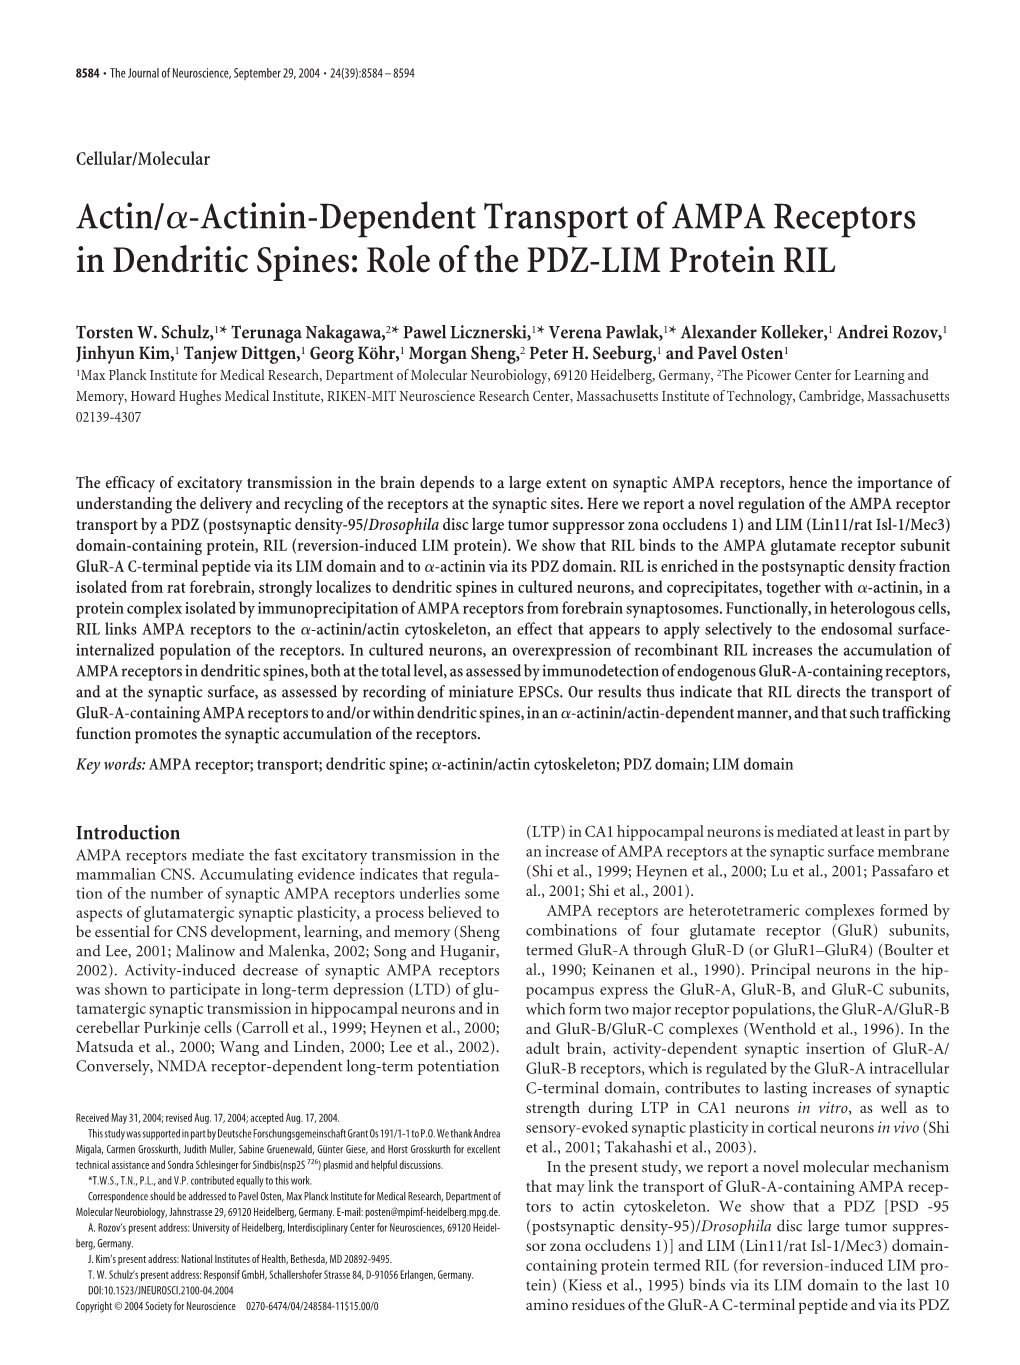 Actin/Α-Actinin-Dependent Transport of AMPA